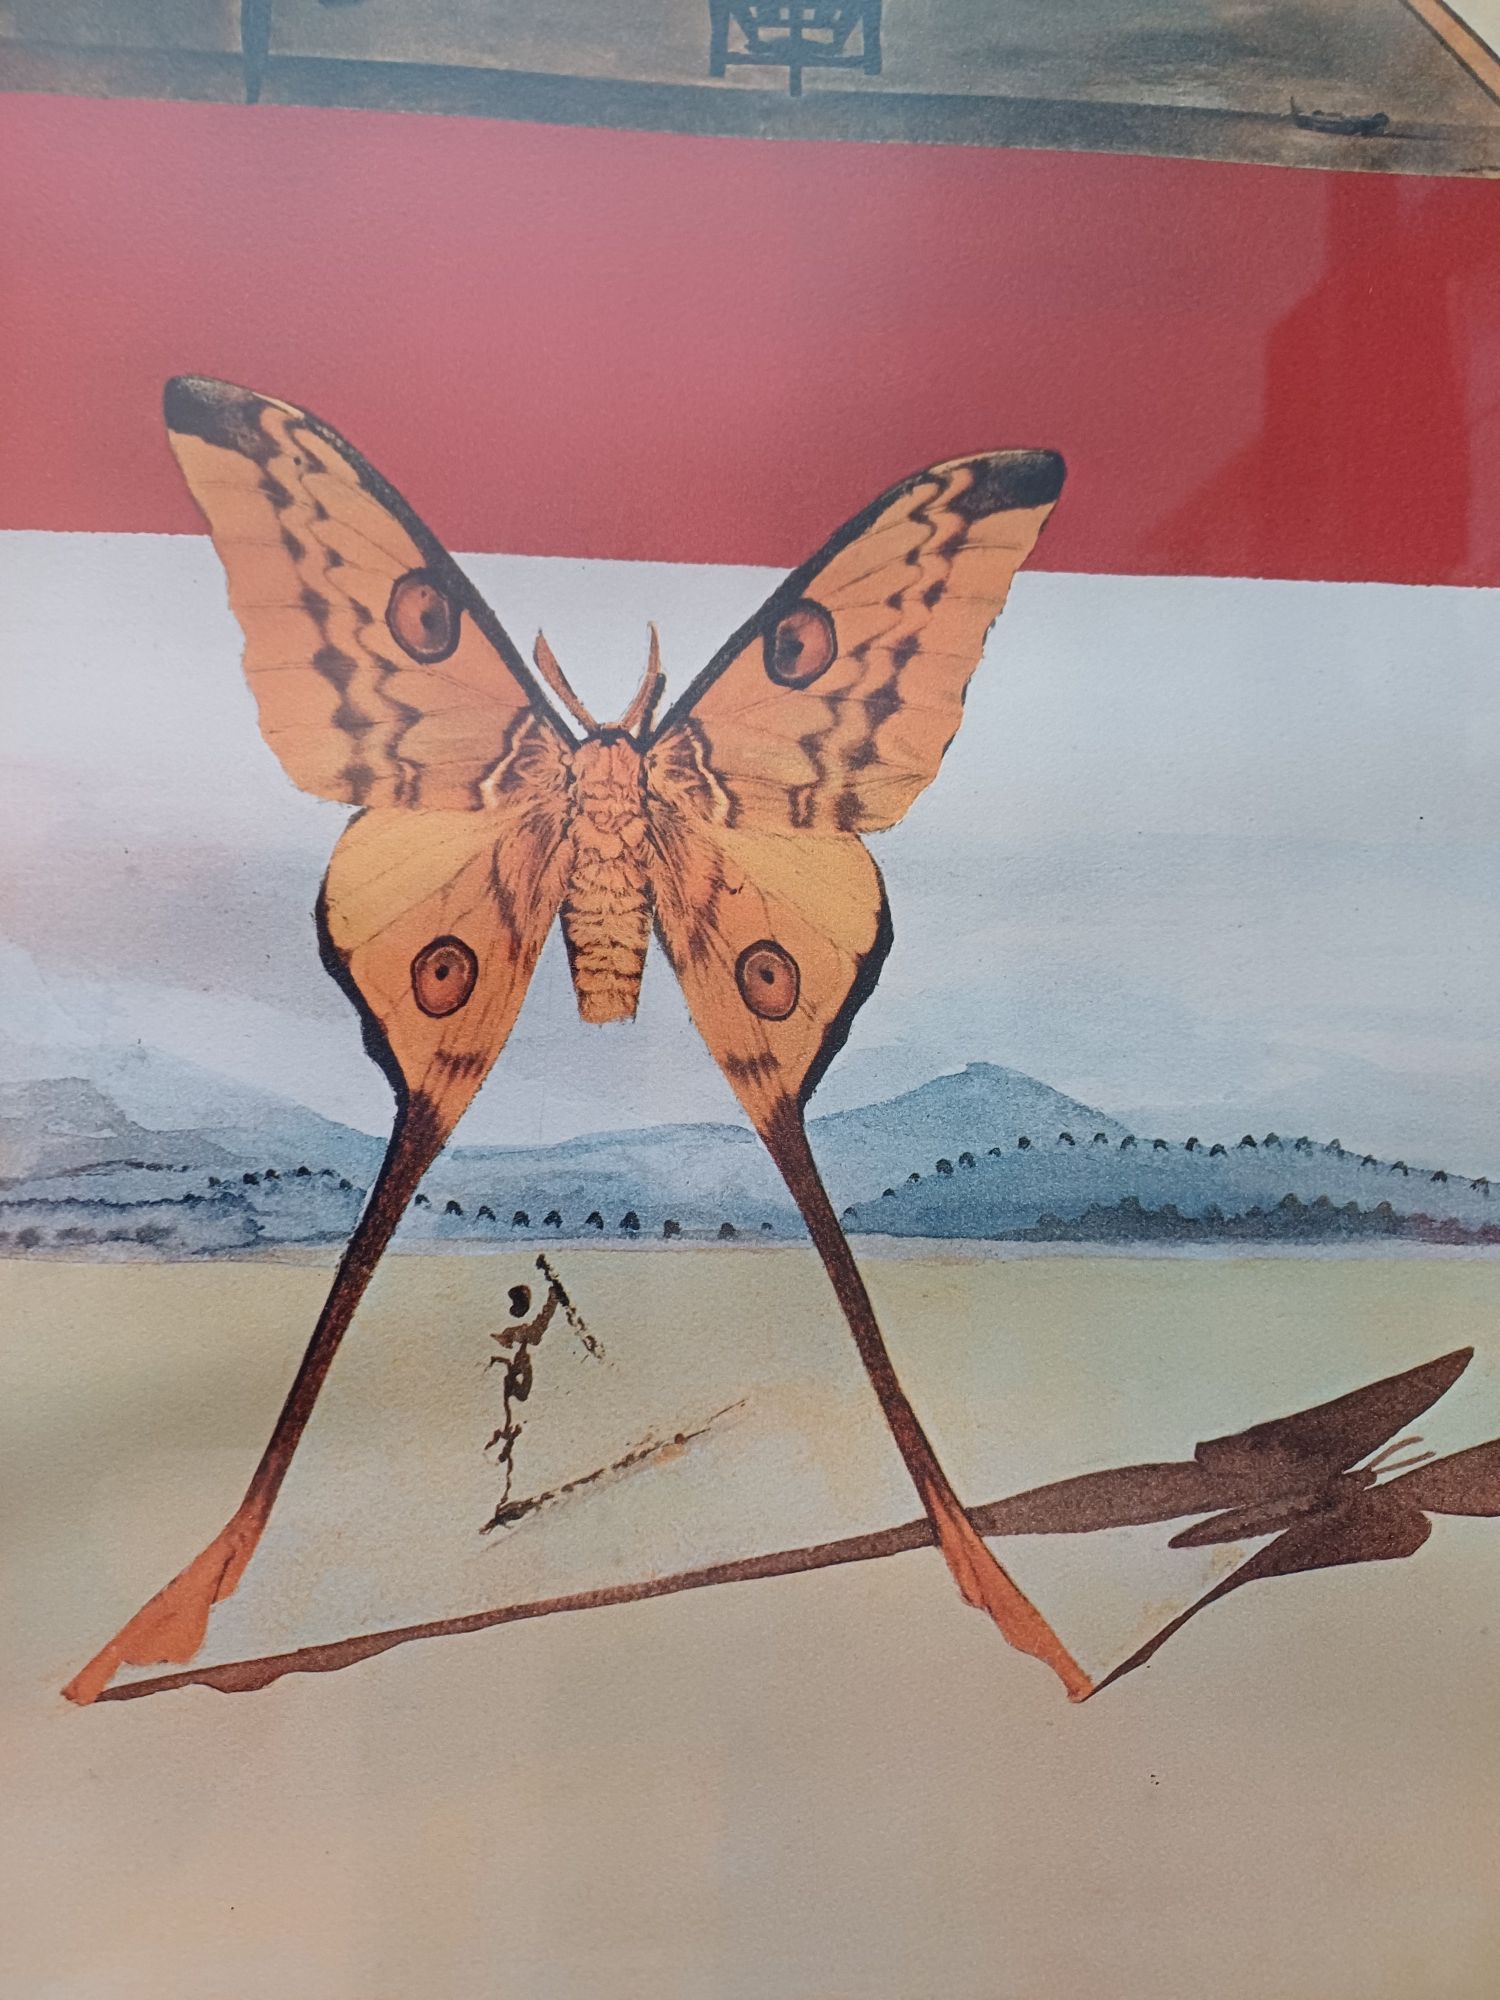 Litografie originală Salvador Dali - Roussillon , 1969 , 96x68 cm